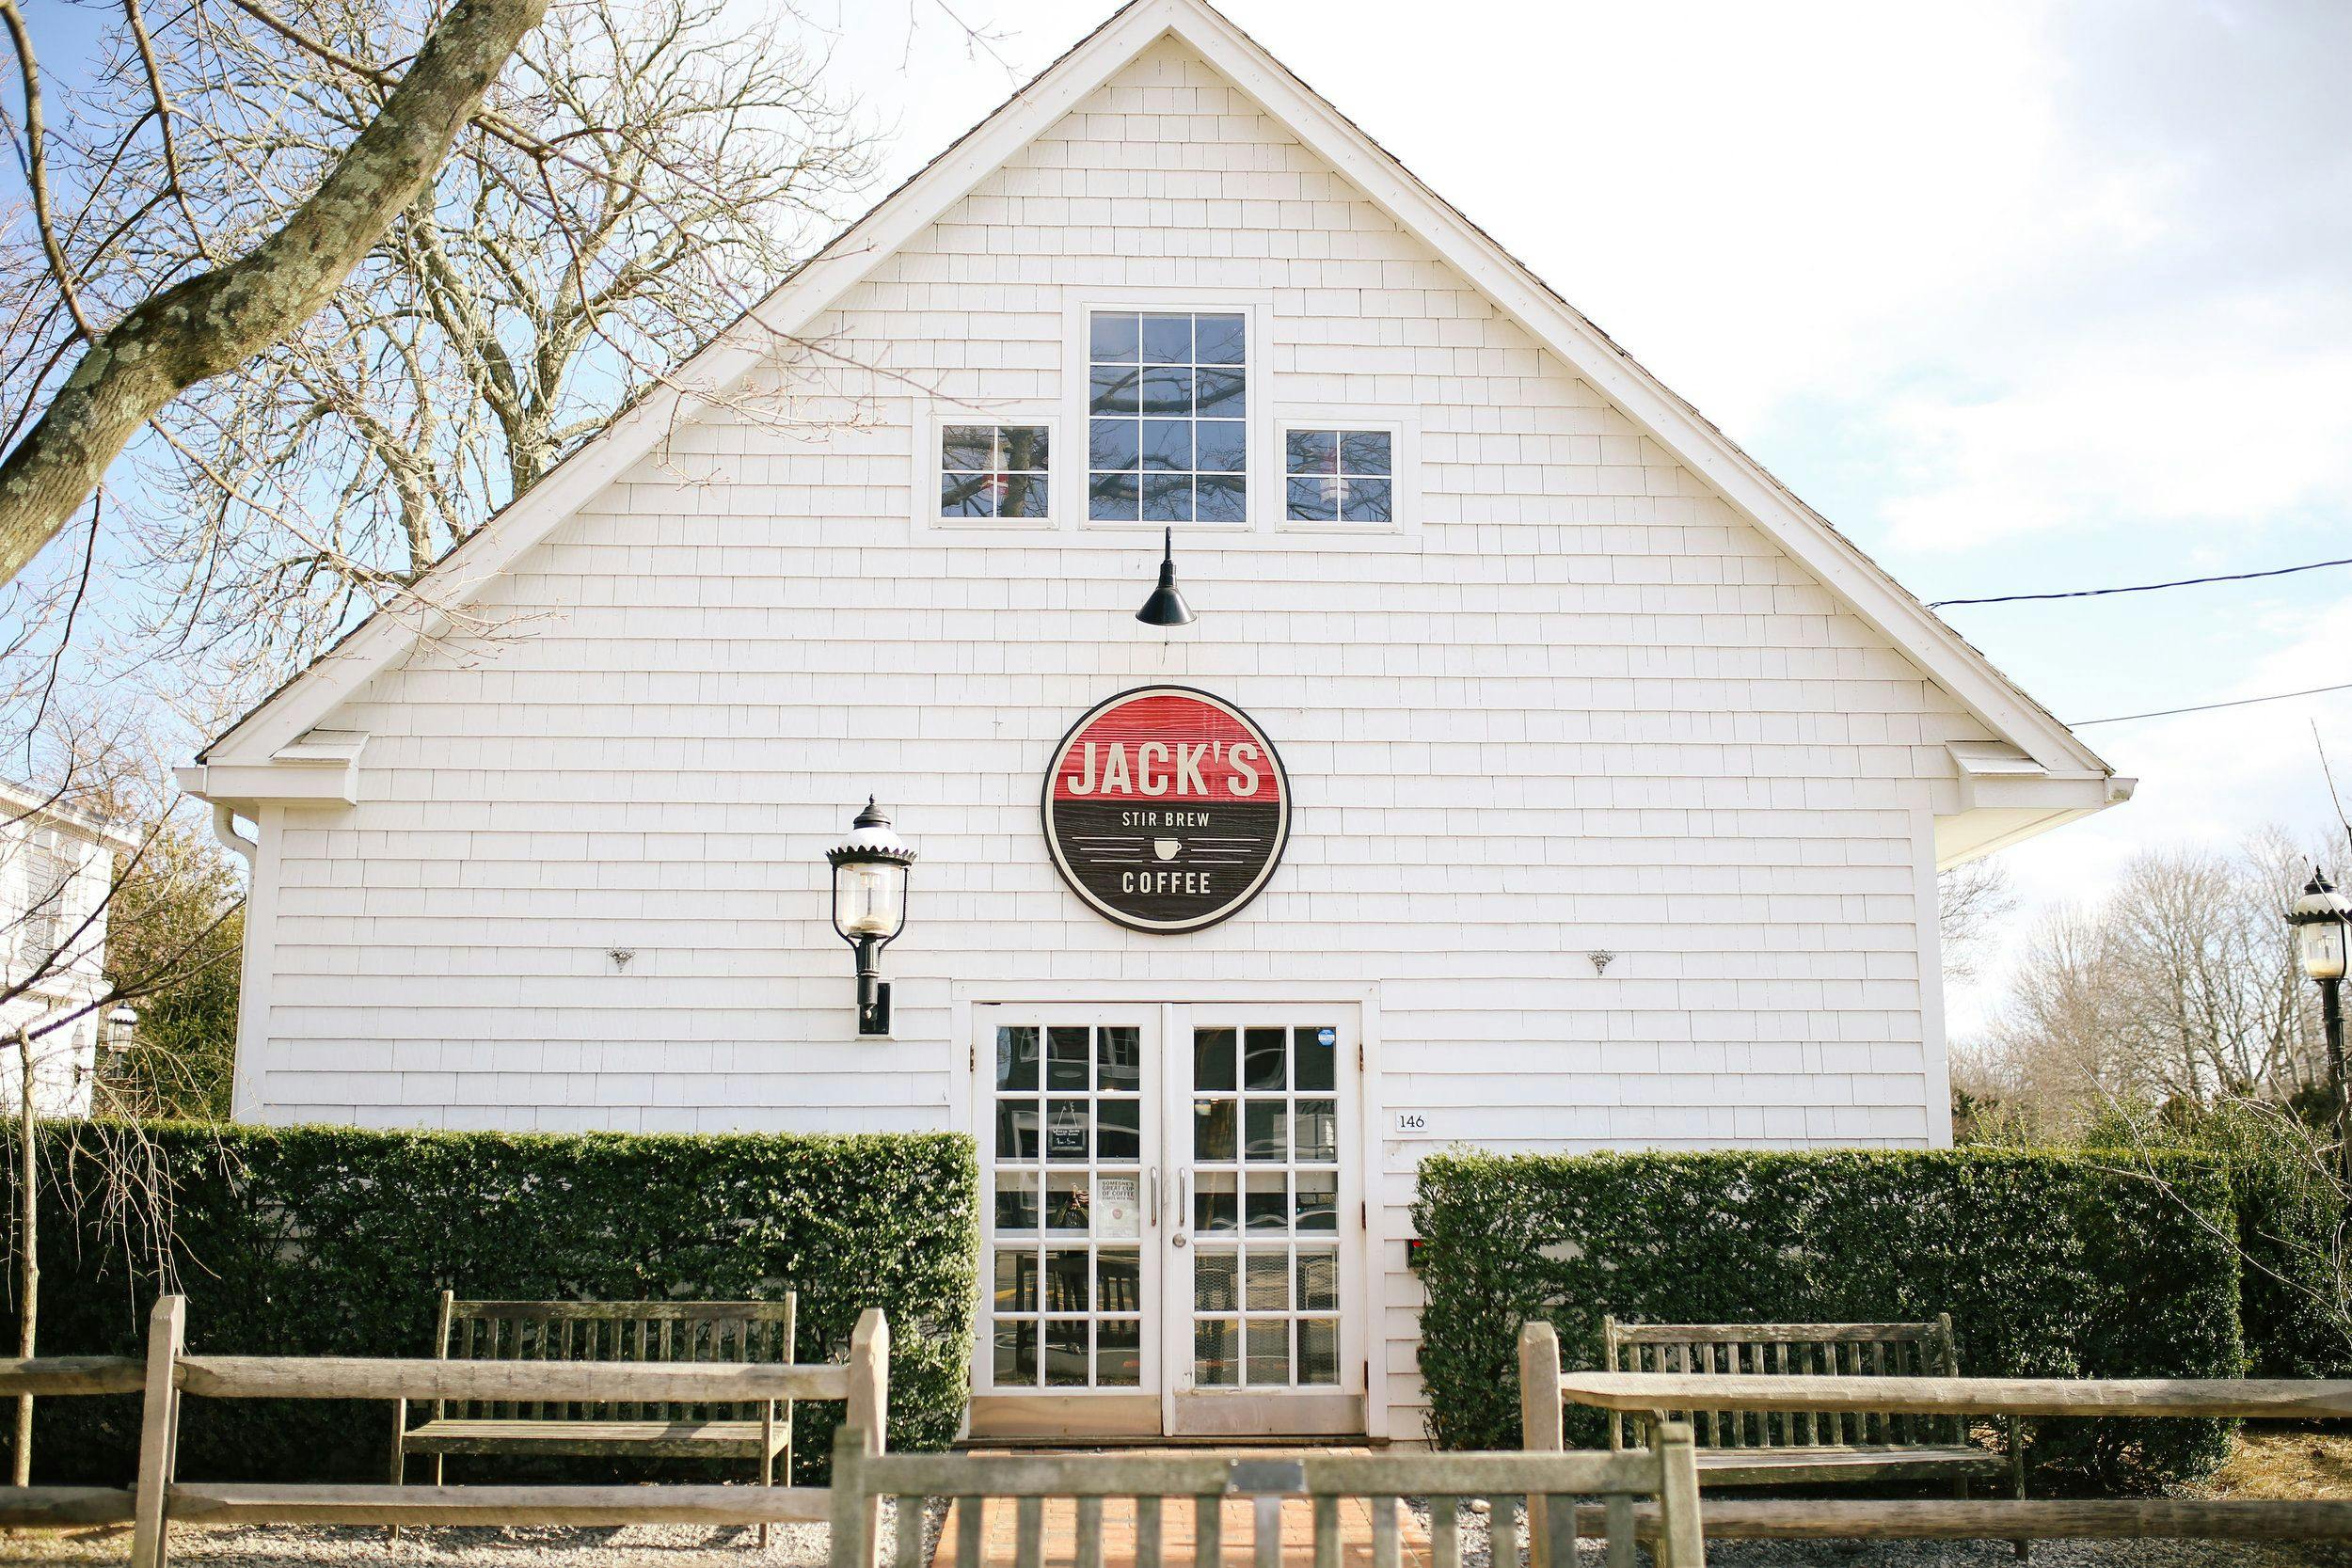 Jack's Stir Brew Coffee Ourdoor Retails Space in Amagansett, Long Island